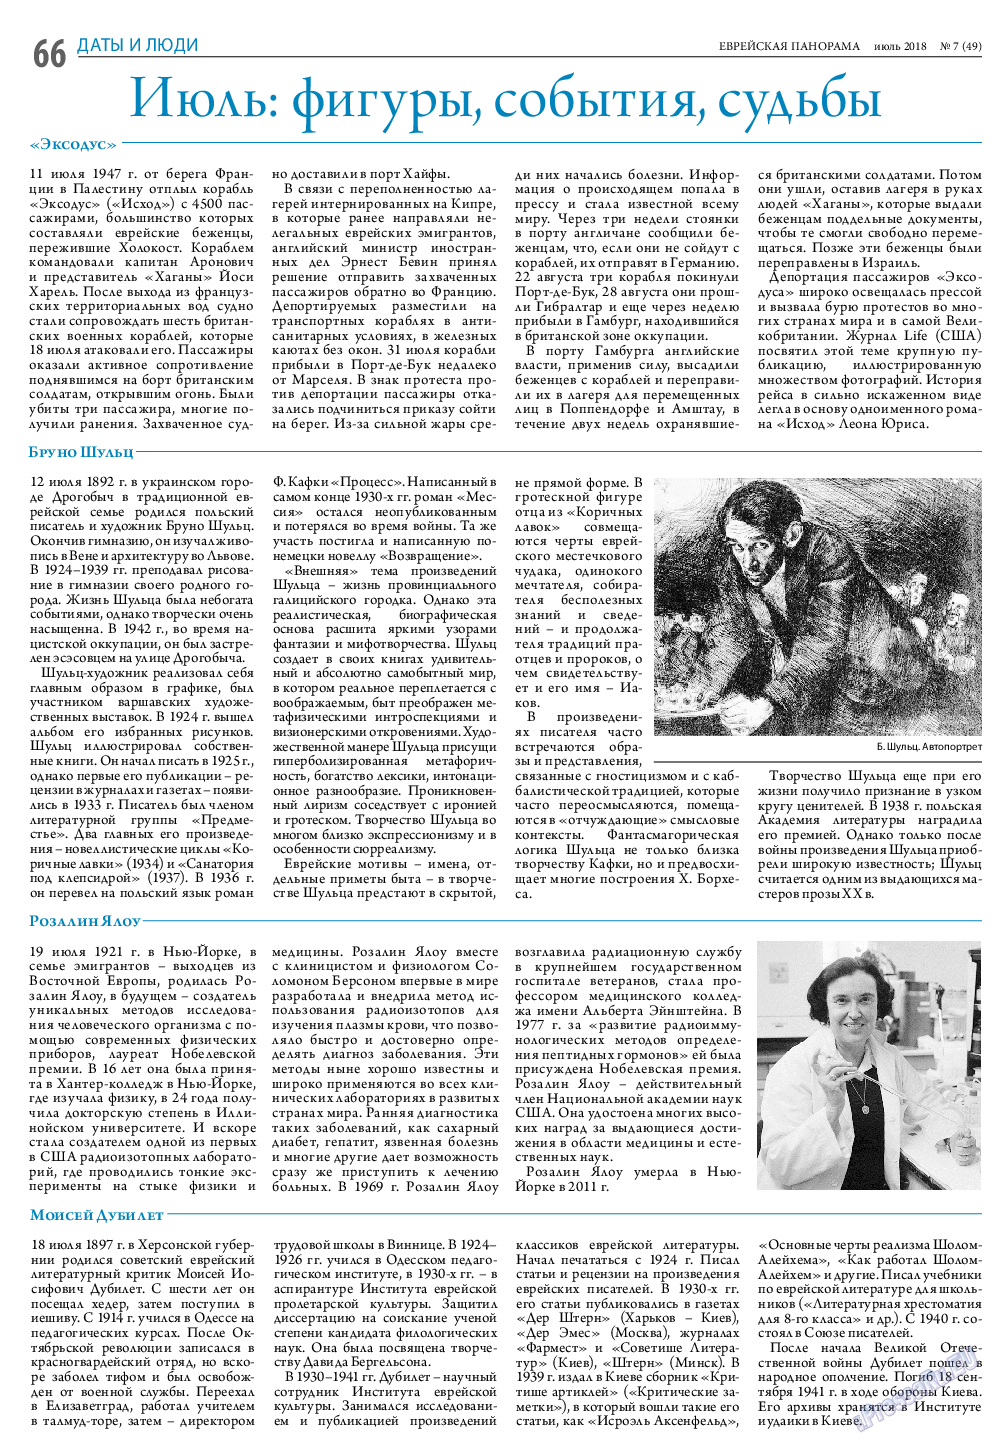 Еврейская панорама, газета. 2018 №7 стр.66